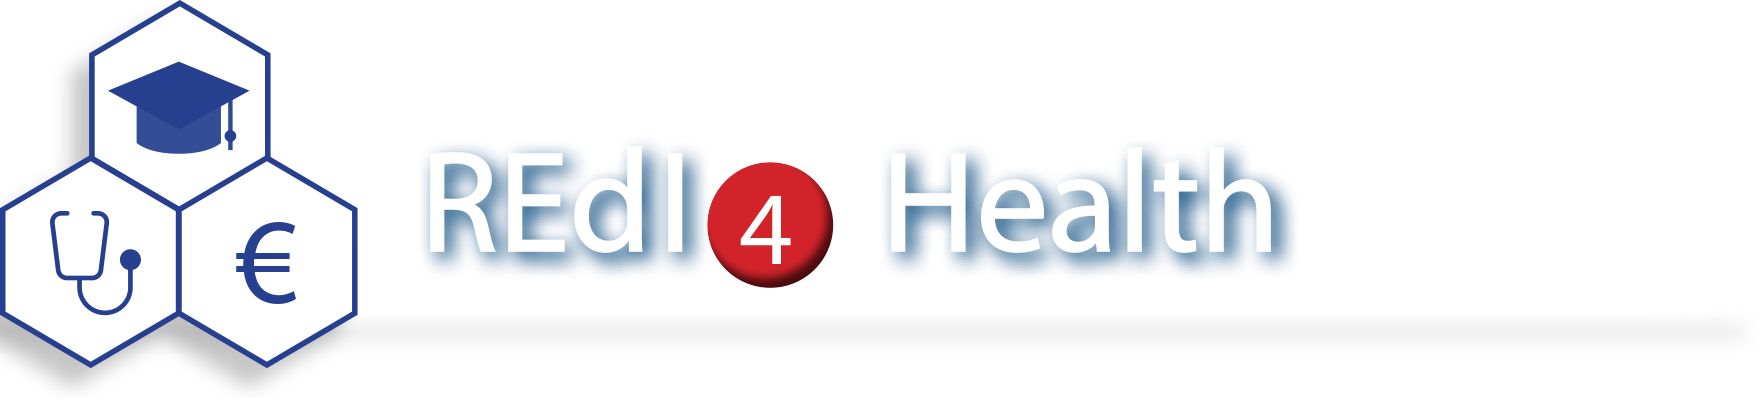 Redi 4 health logo